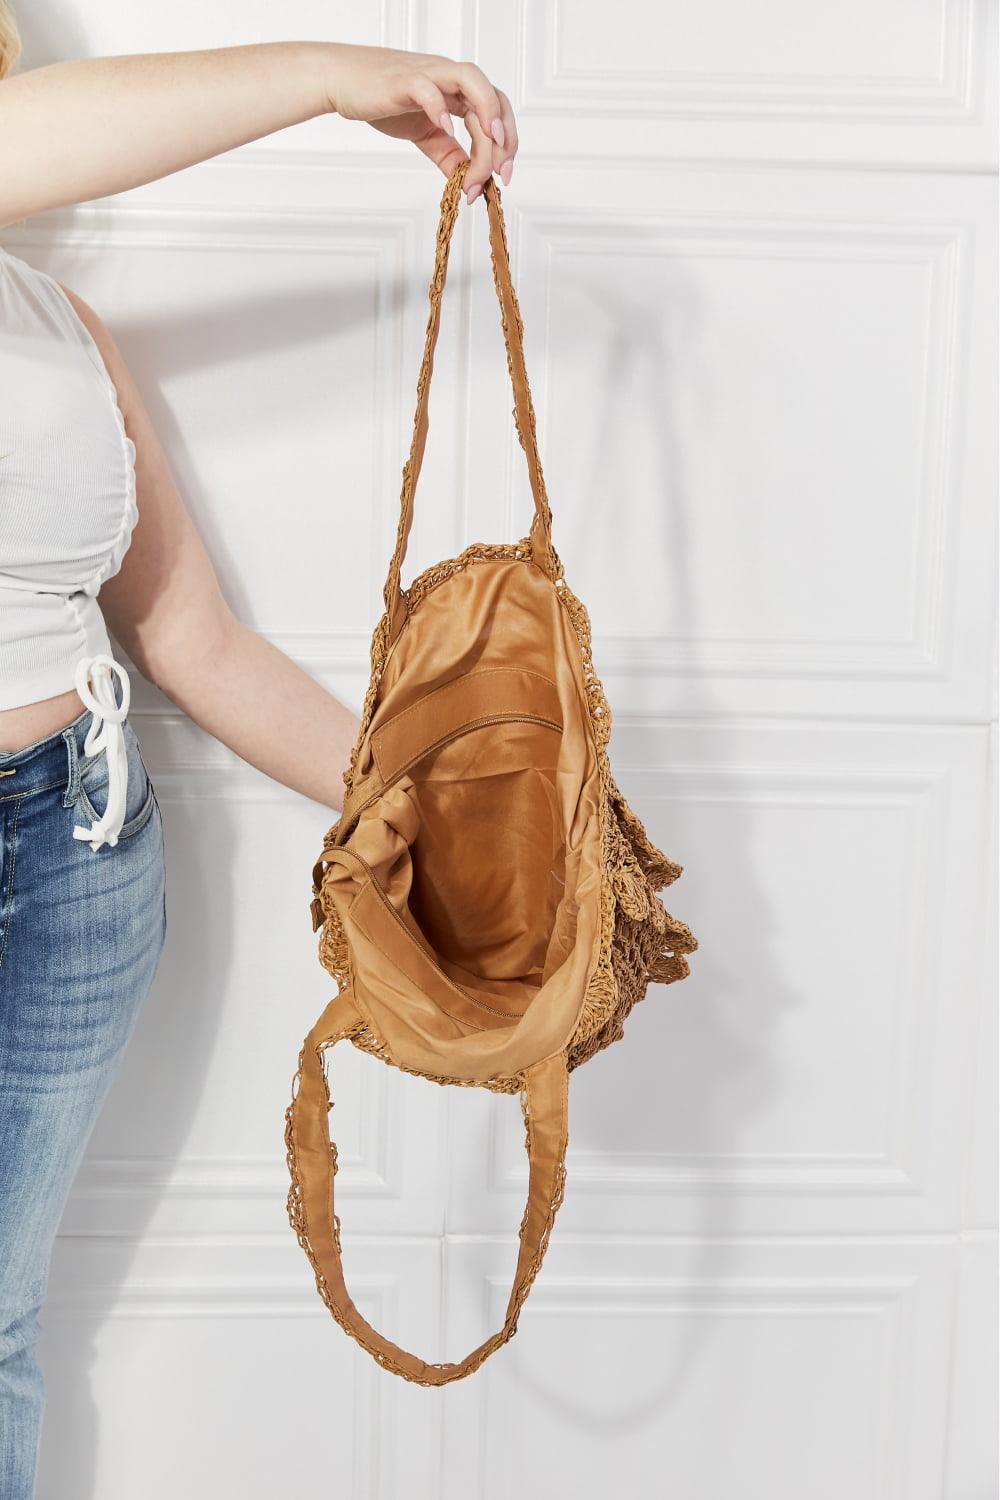 Bona Fide Fashion - Straw Rattan Handbag - Women Fashion - Bona Fide Fashion